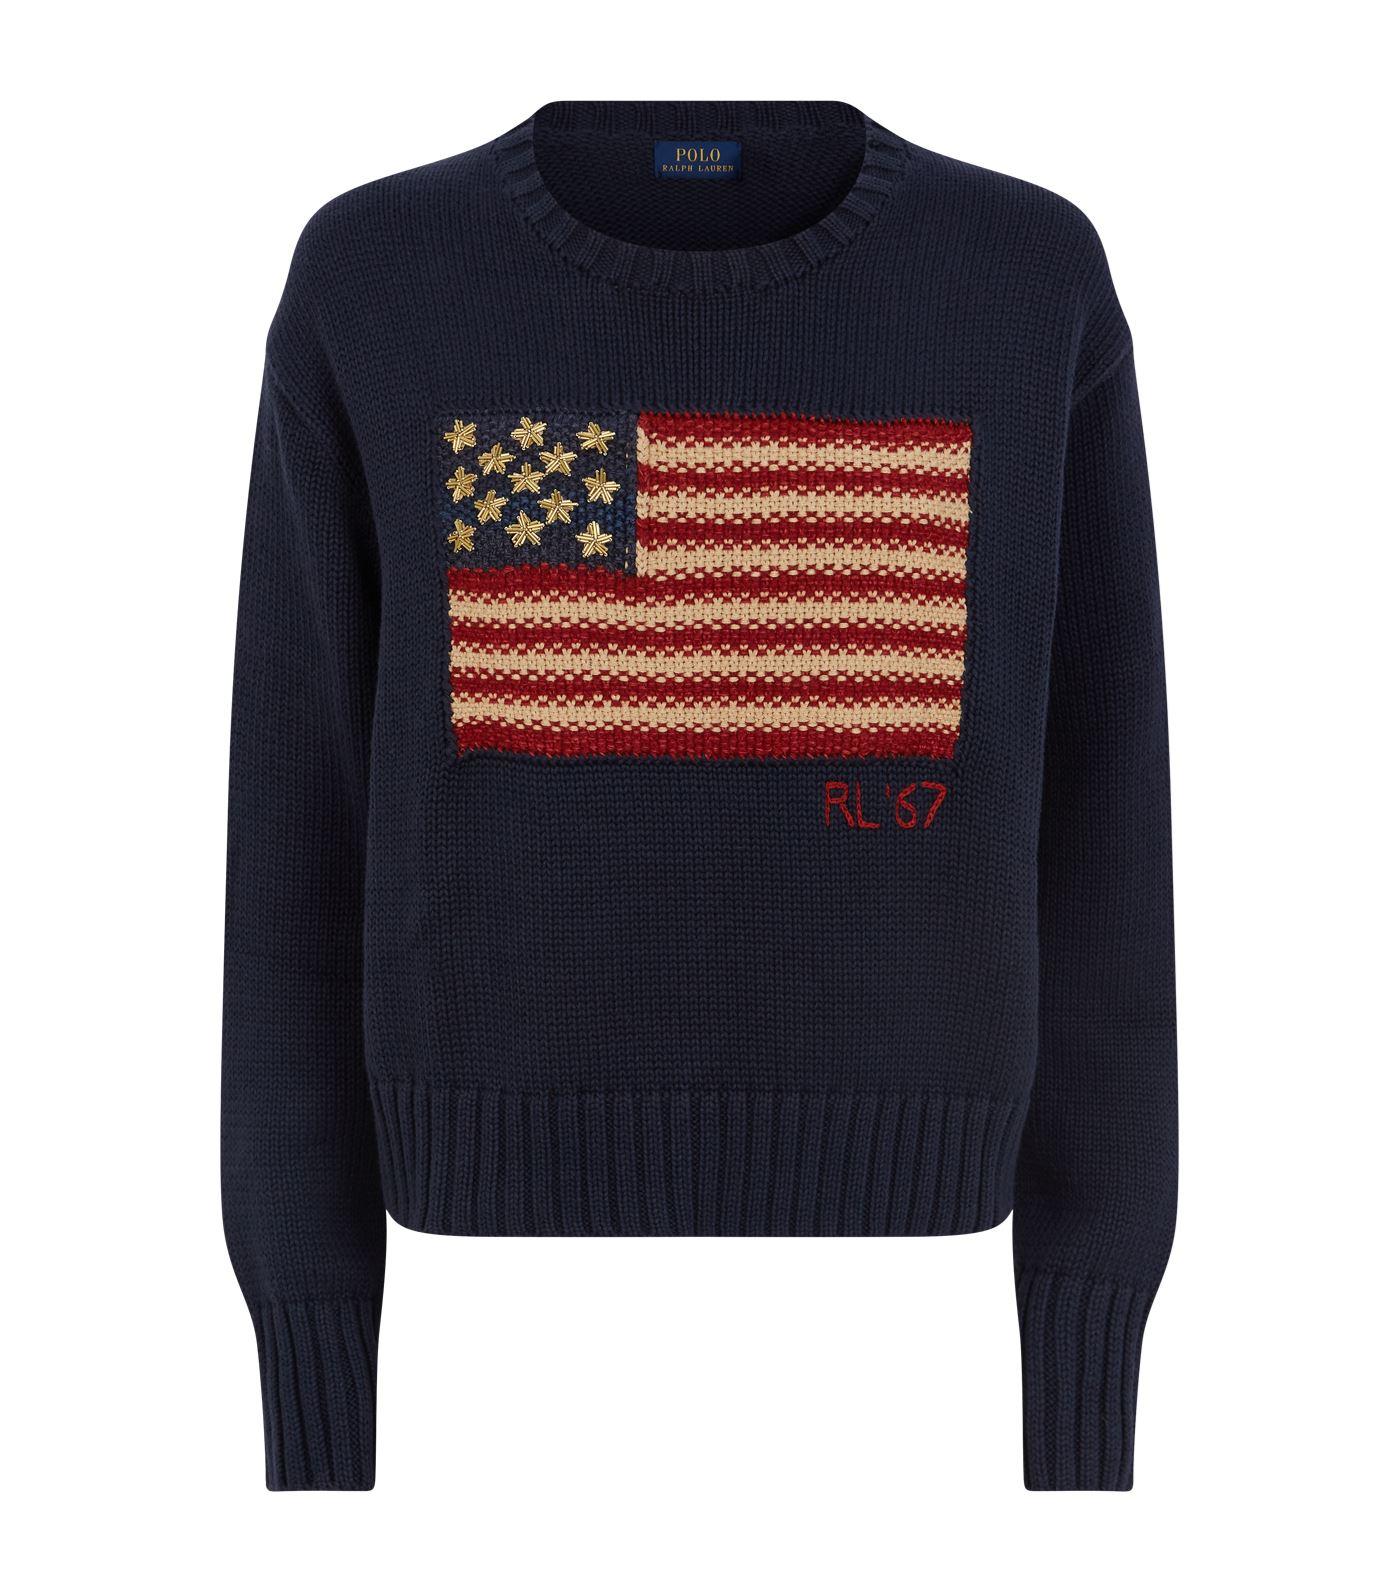 Polo Ralph Lauren Navy American Flag Sweater 